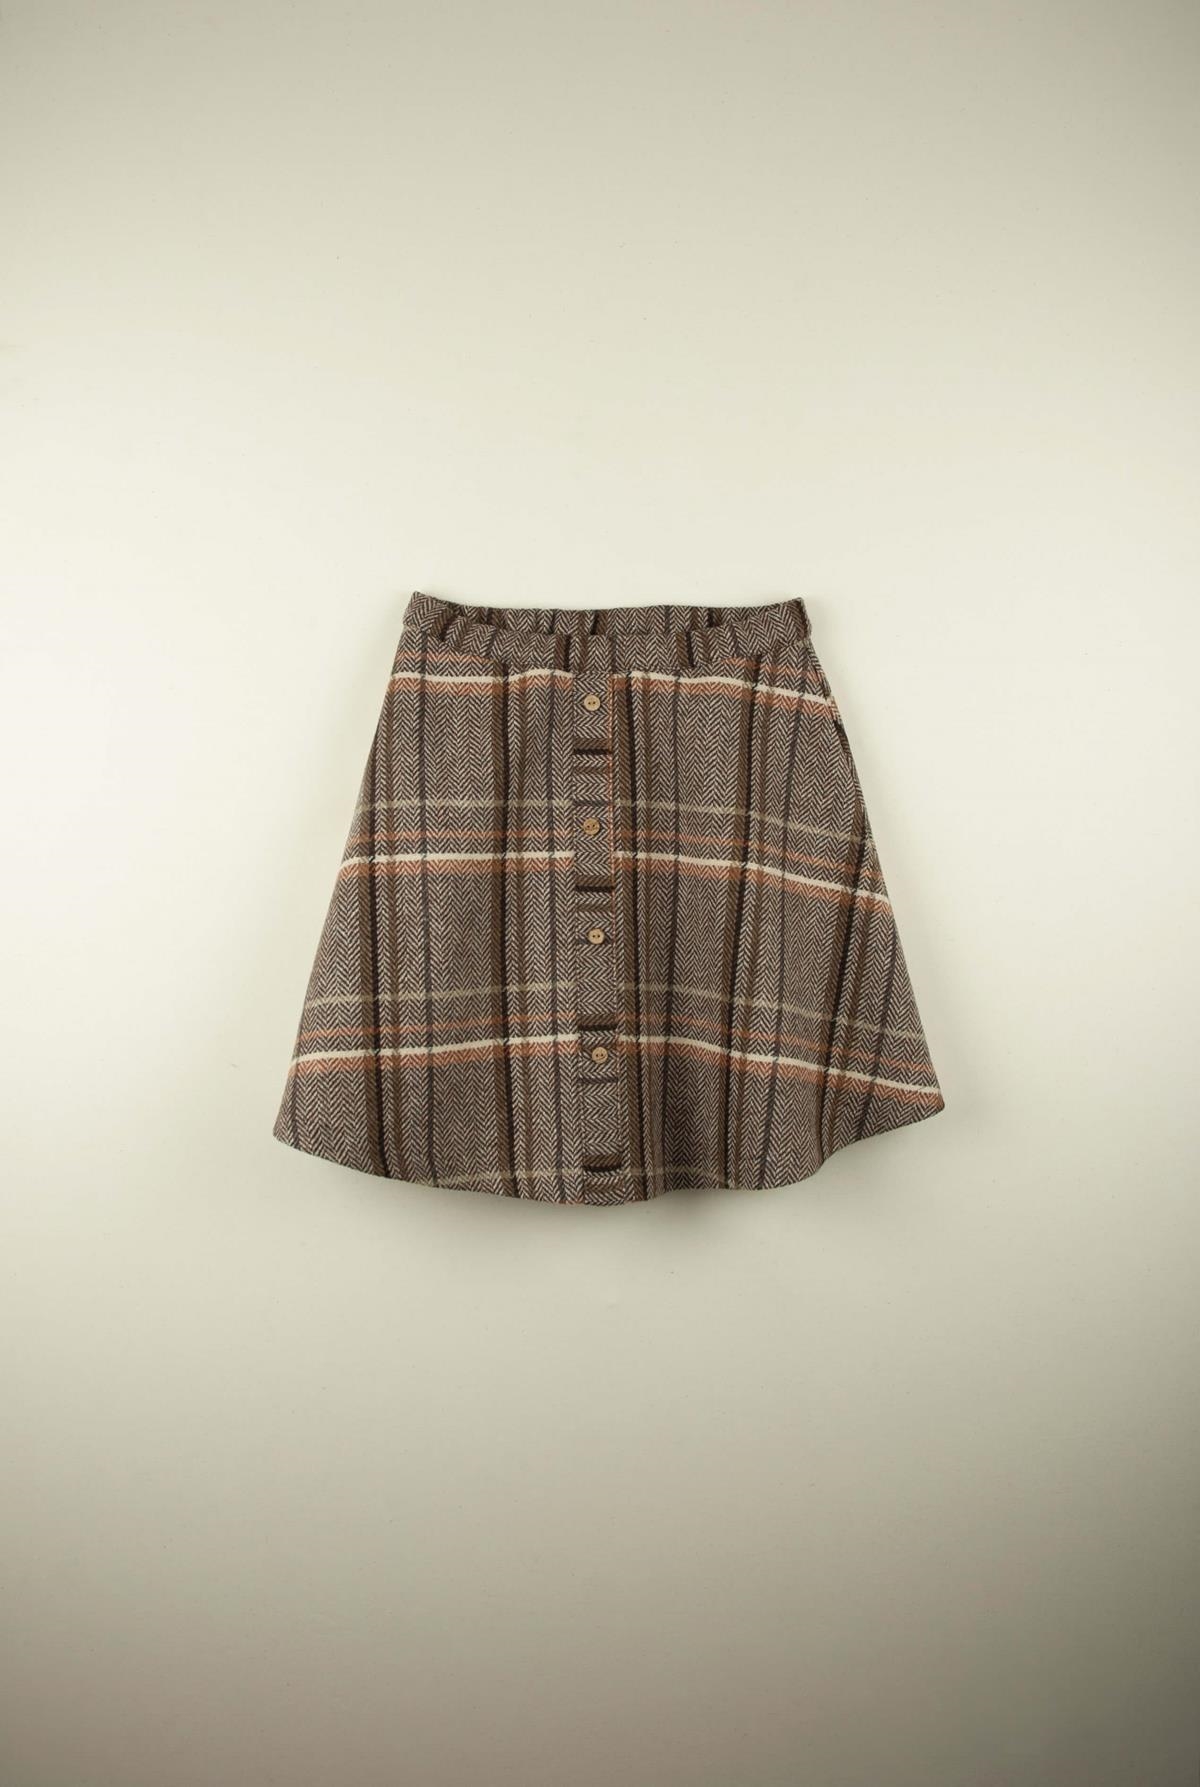 Mod.18.4 Herringbone plaid A-line skirt | AW21.22 Mod.18.4 Herringbone plaid A-line skirt | 1